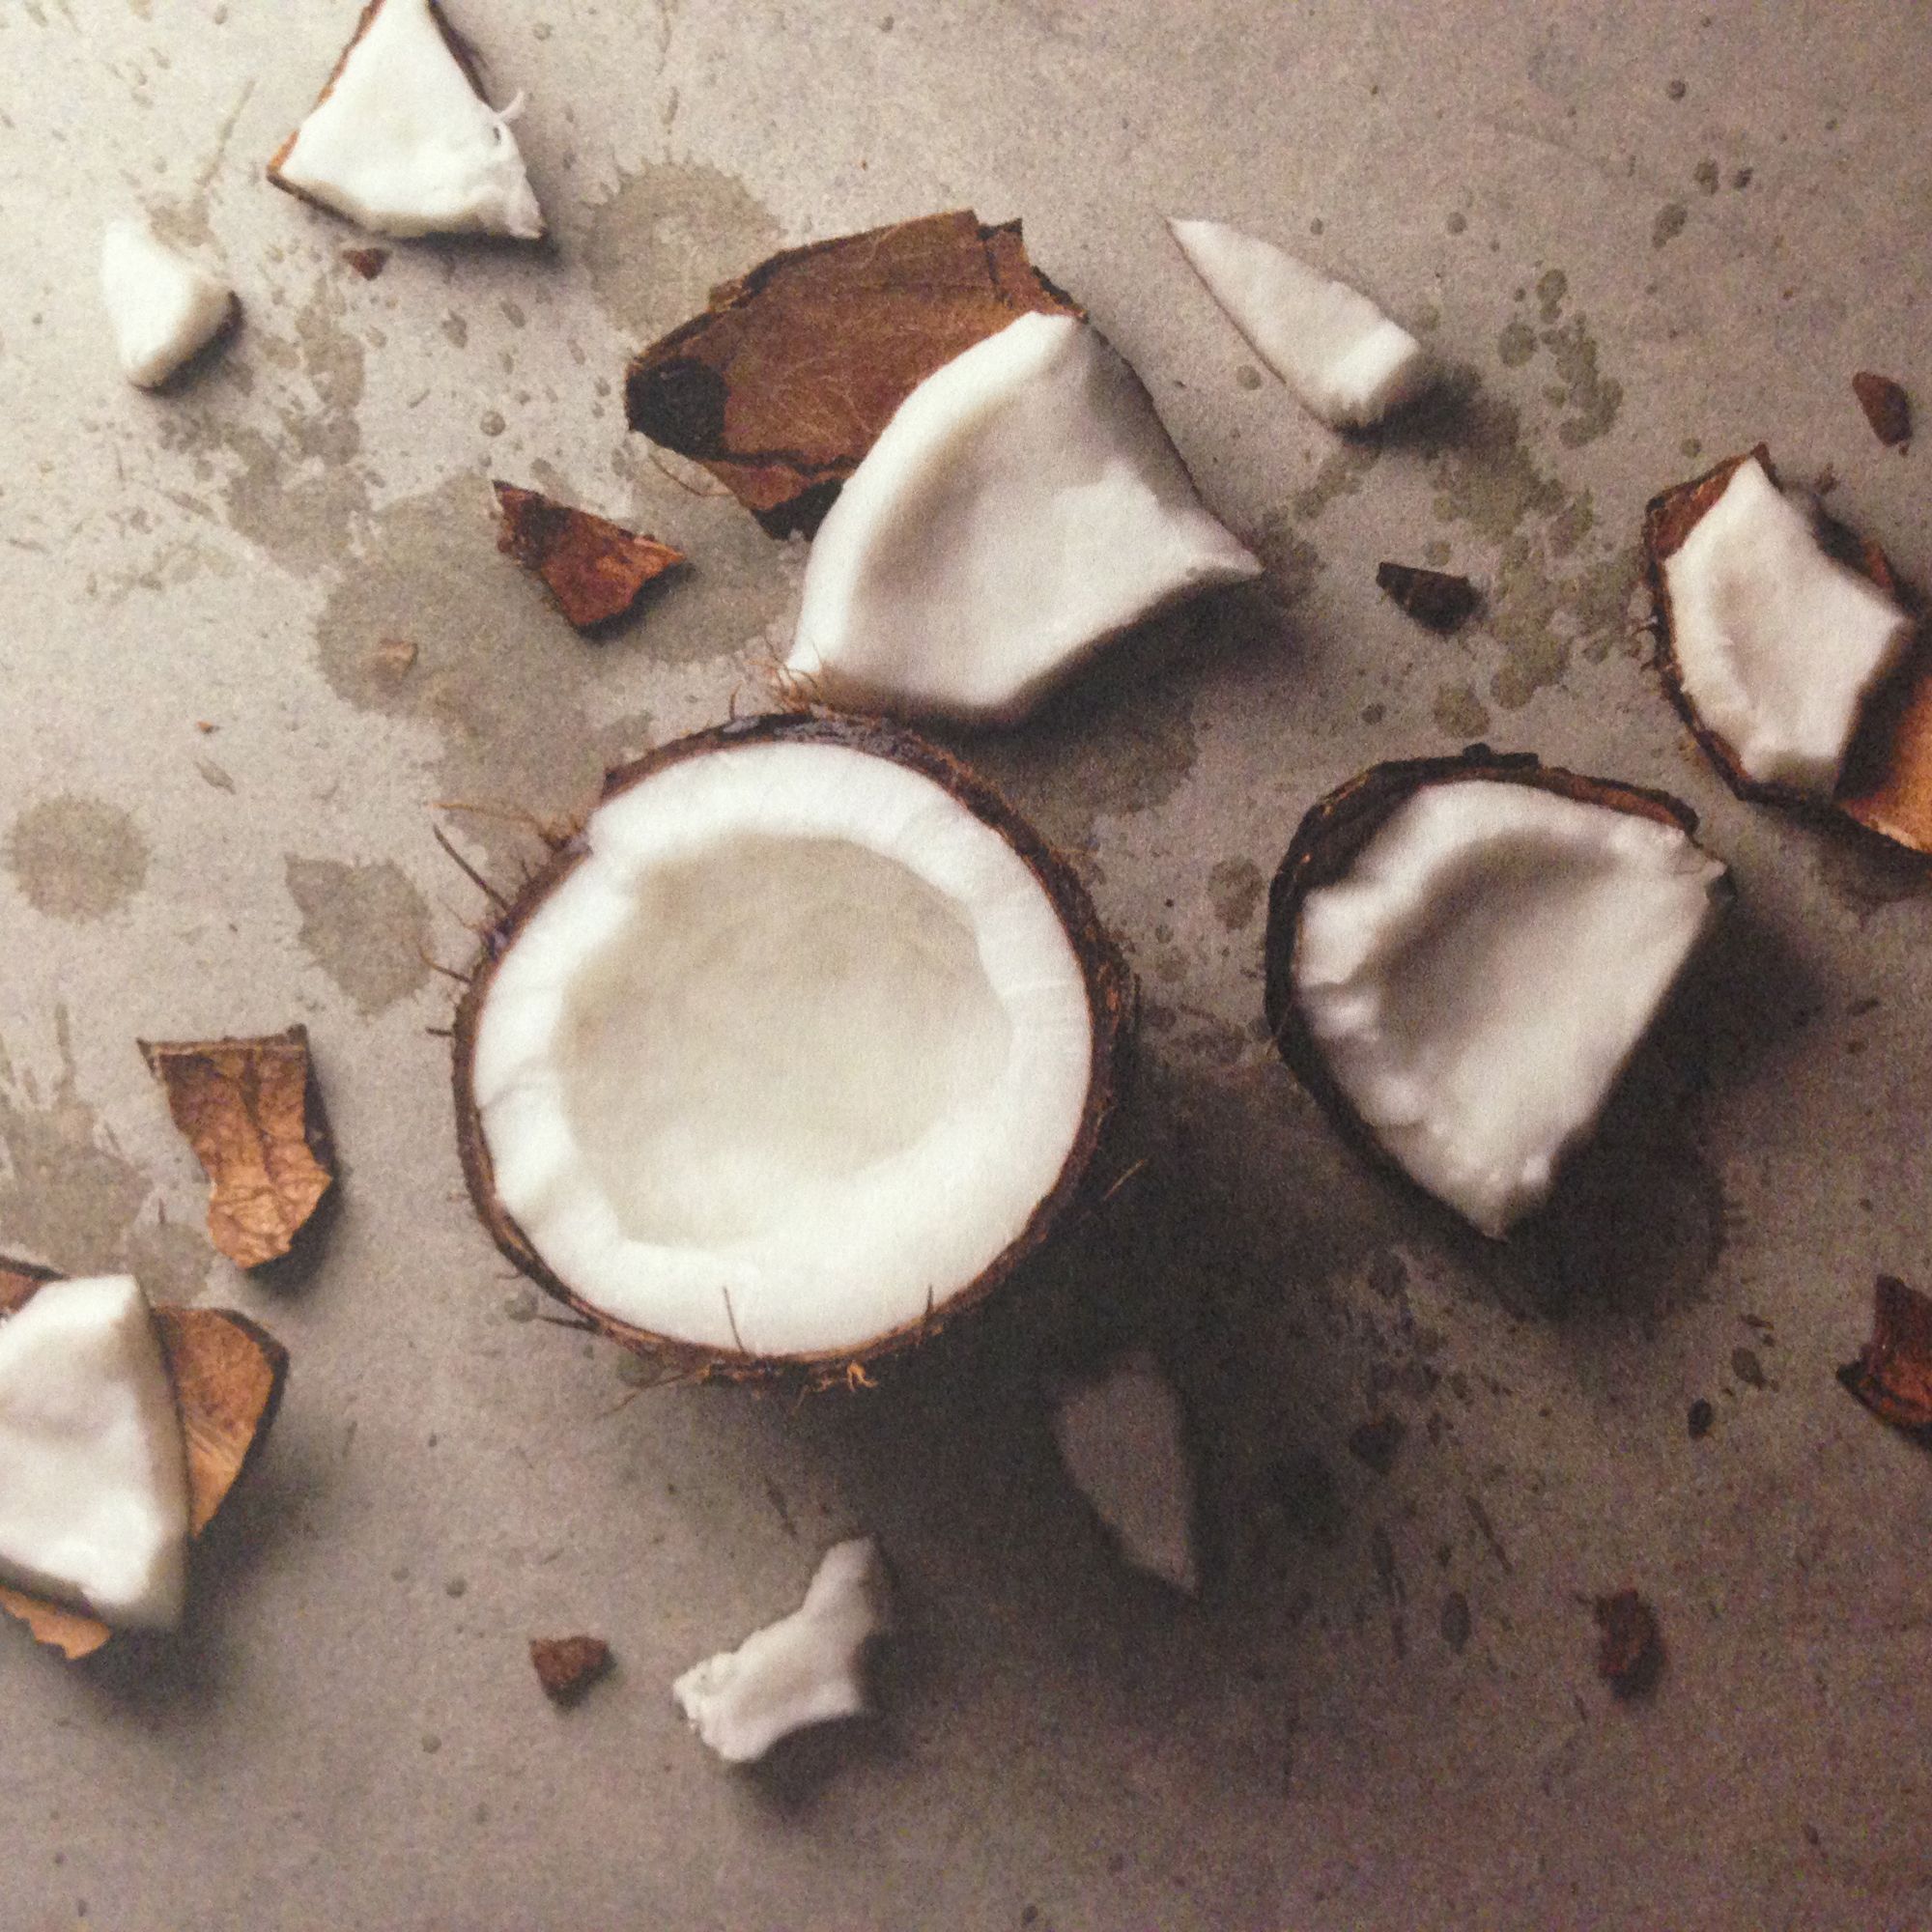 smashed coconut | product photography | Pinterest | Product ...